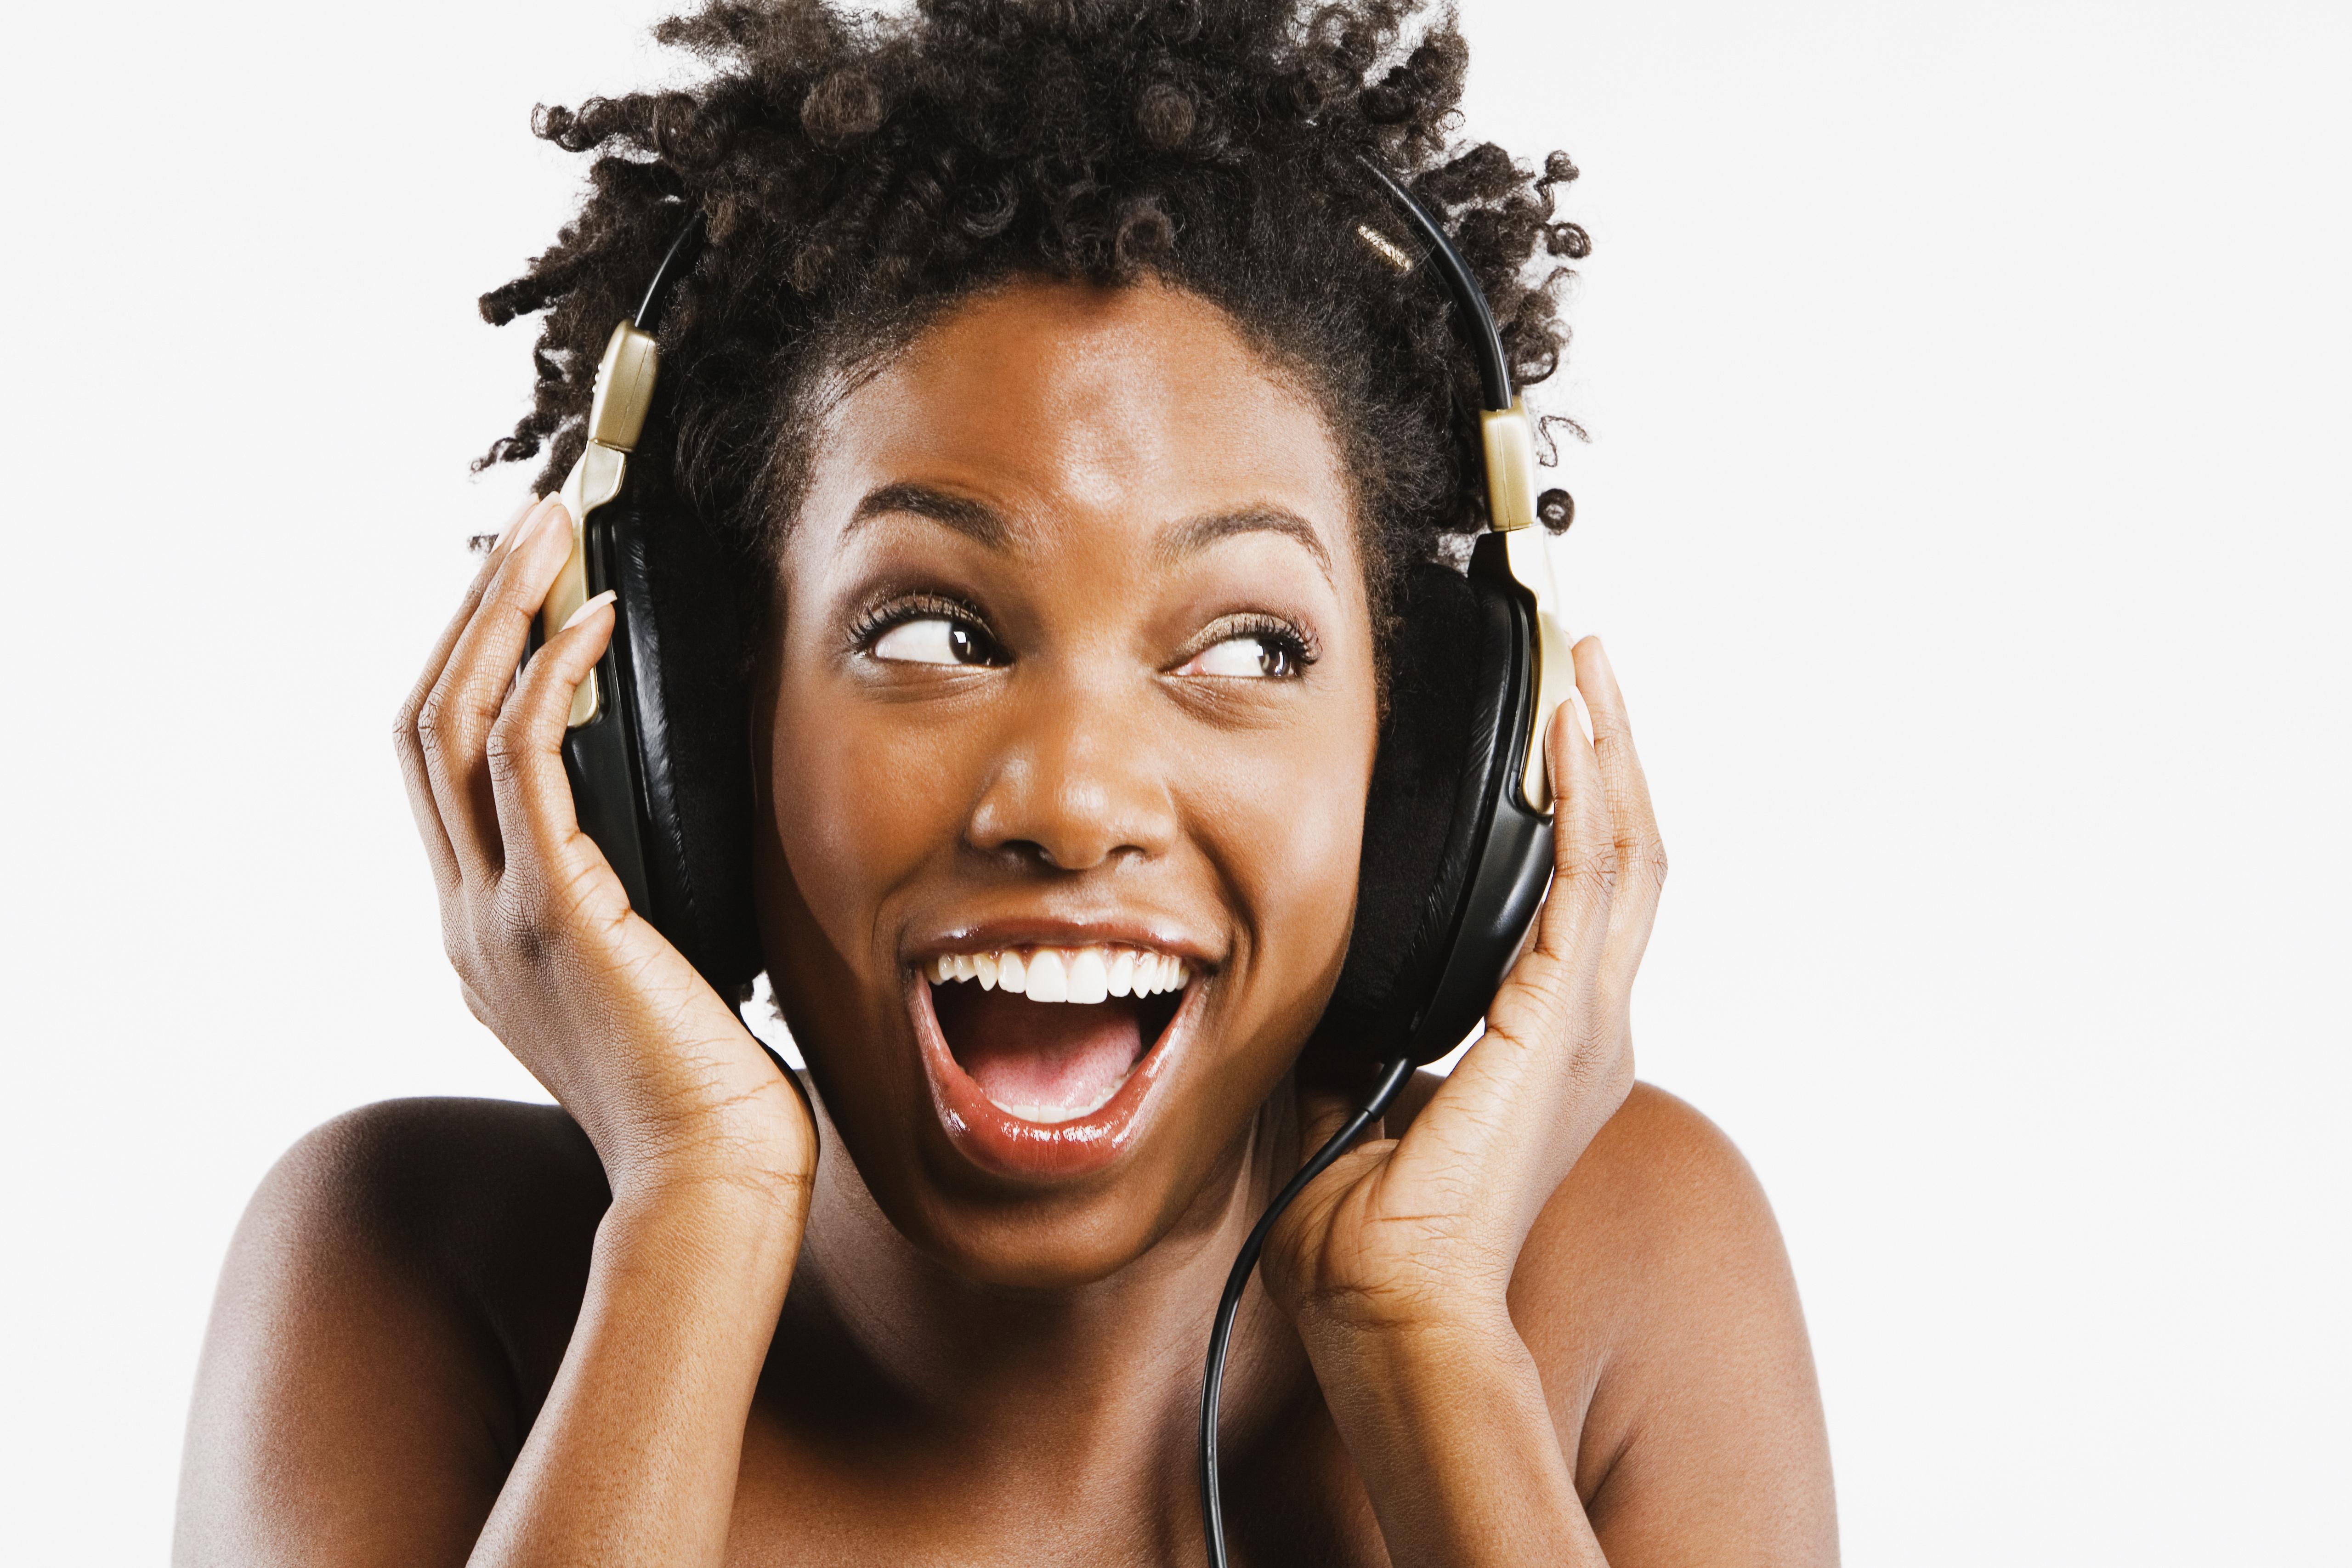 African American woman listening to headphones